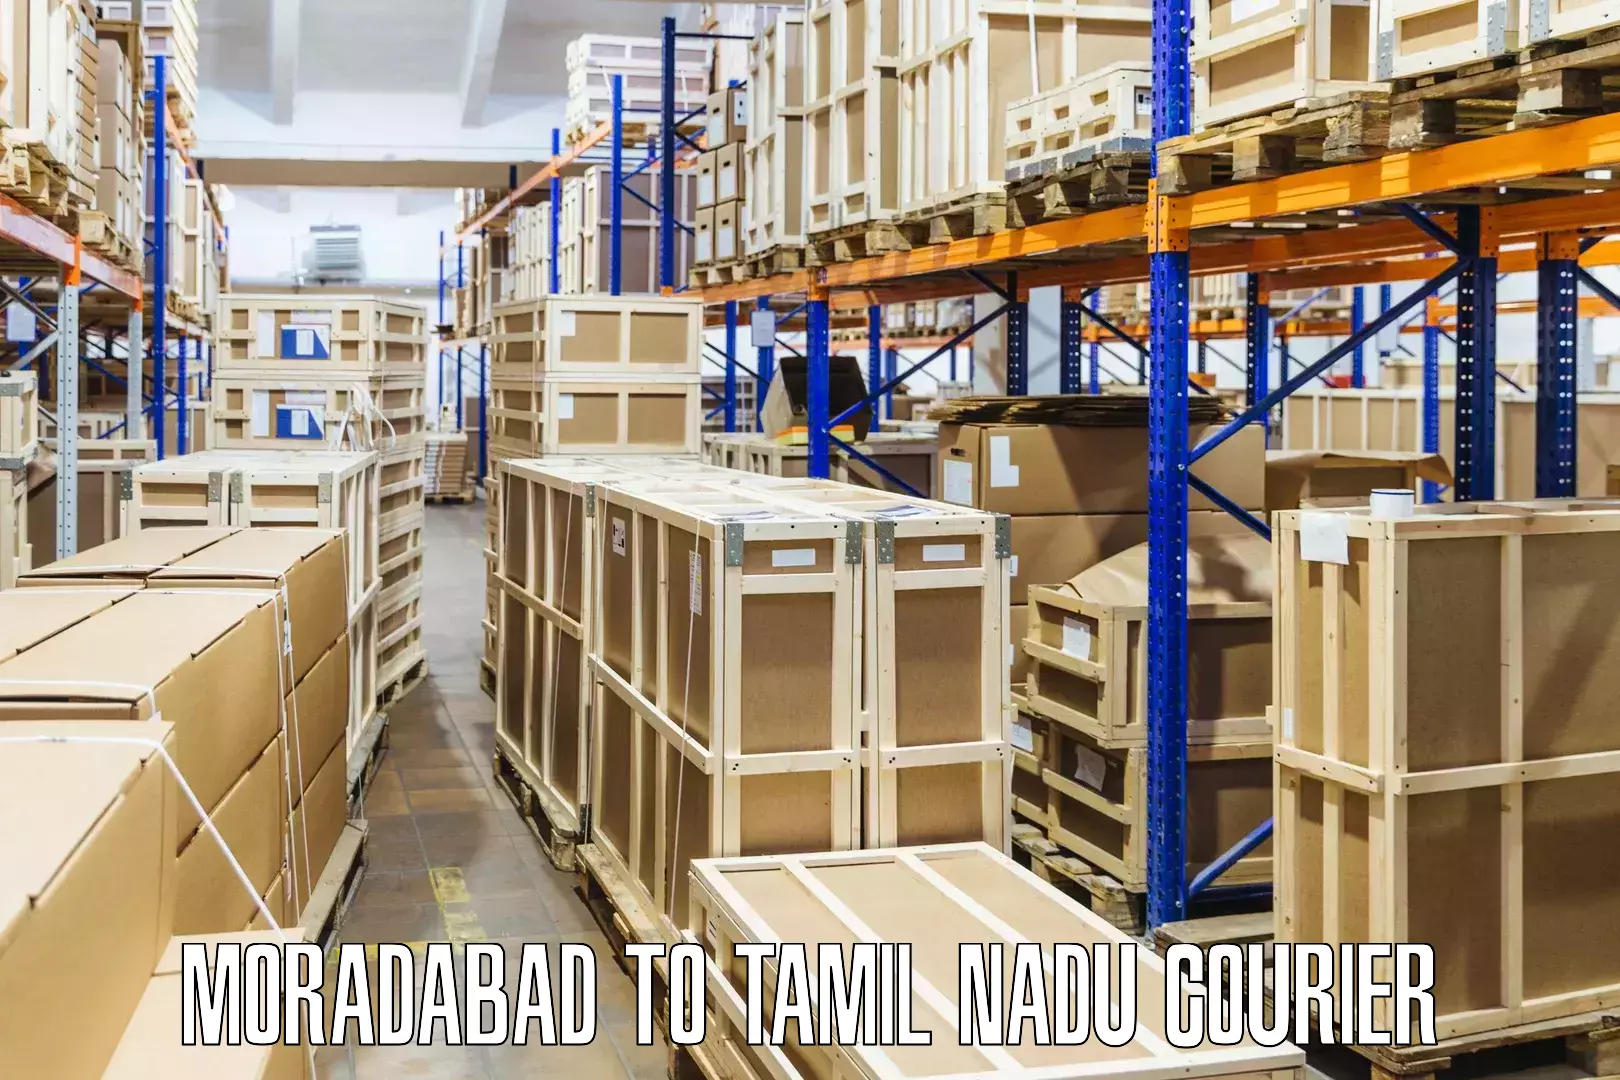 Quick parcel dispatch in Moradabad to Tamil Nadu